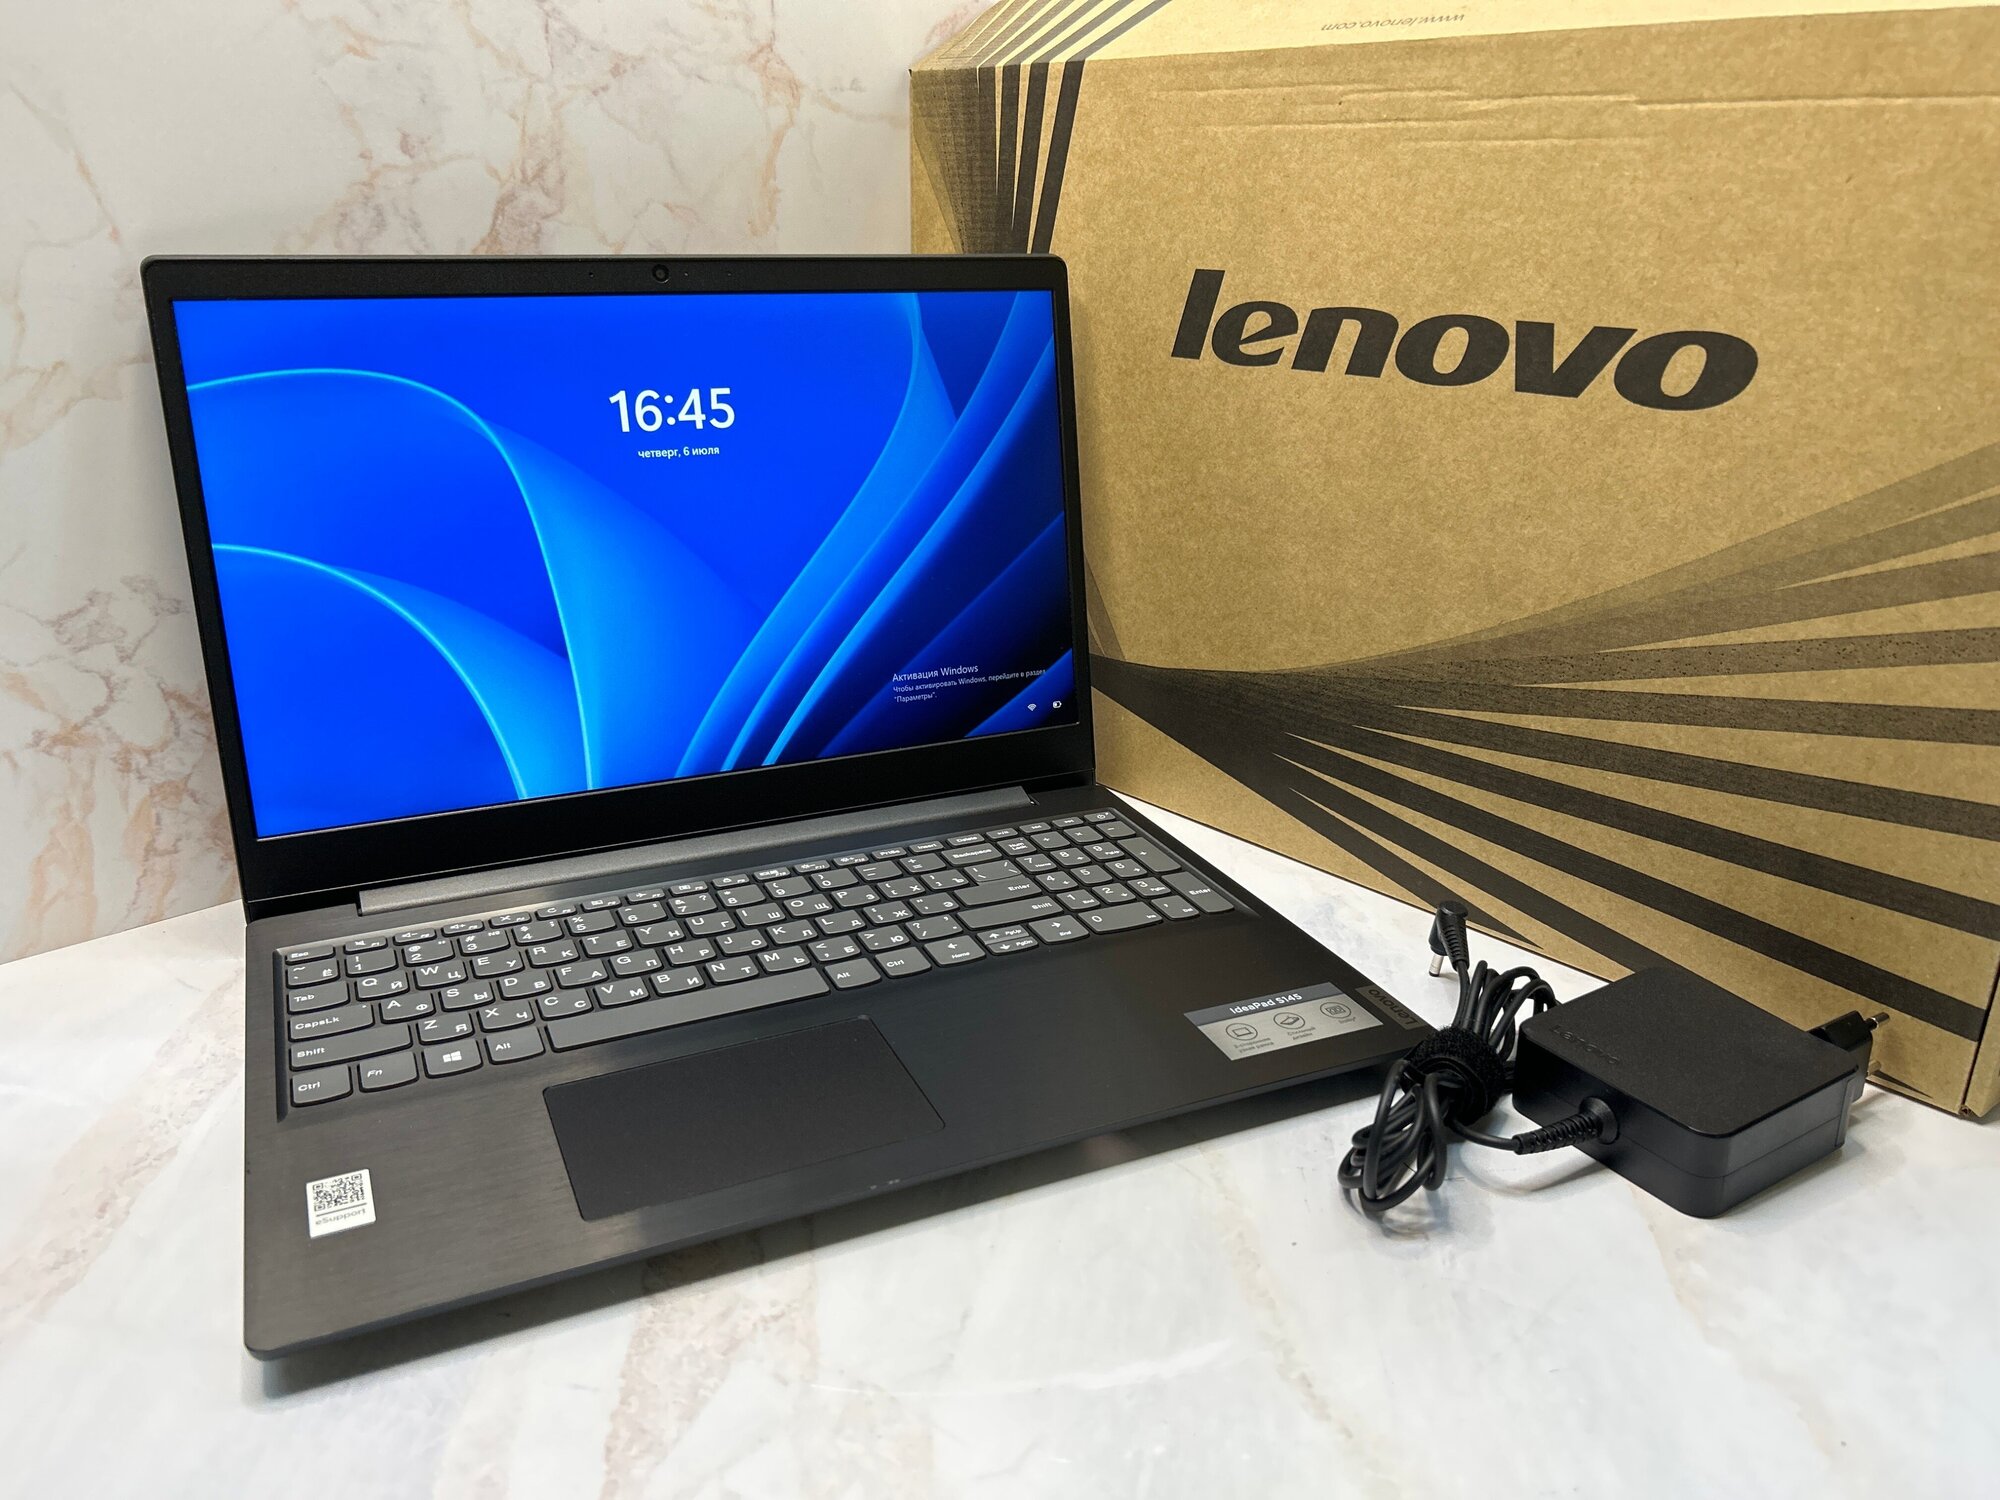 Ноутбук Lenovo S145-15API. Конфигурация: AMD 3020E/4GB/128GB + 500GB/Radeon Vega 3/FHD/DOS